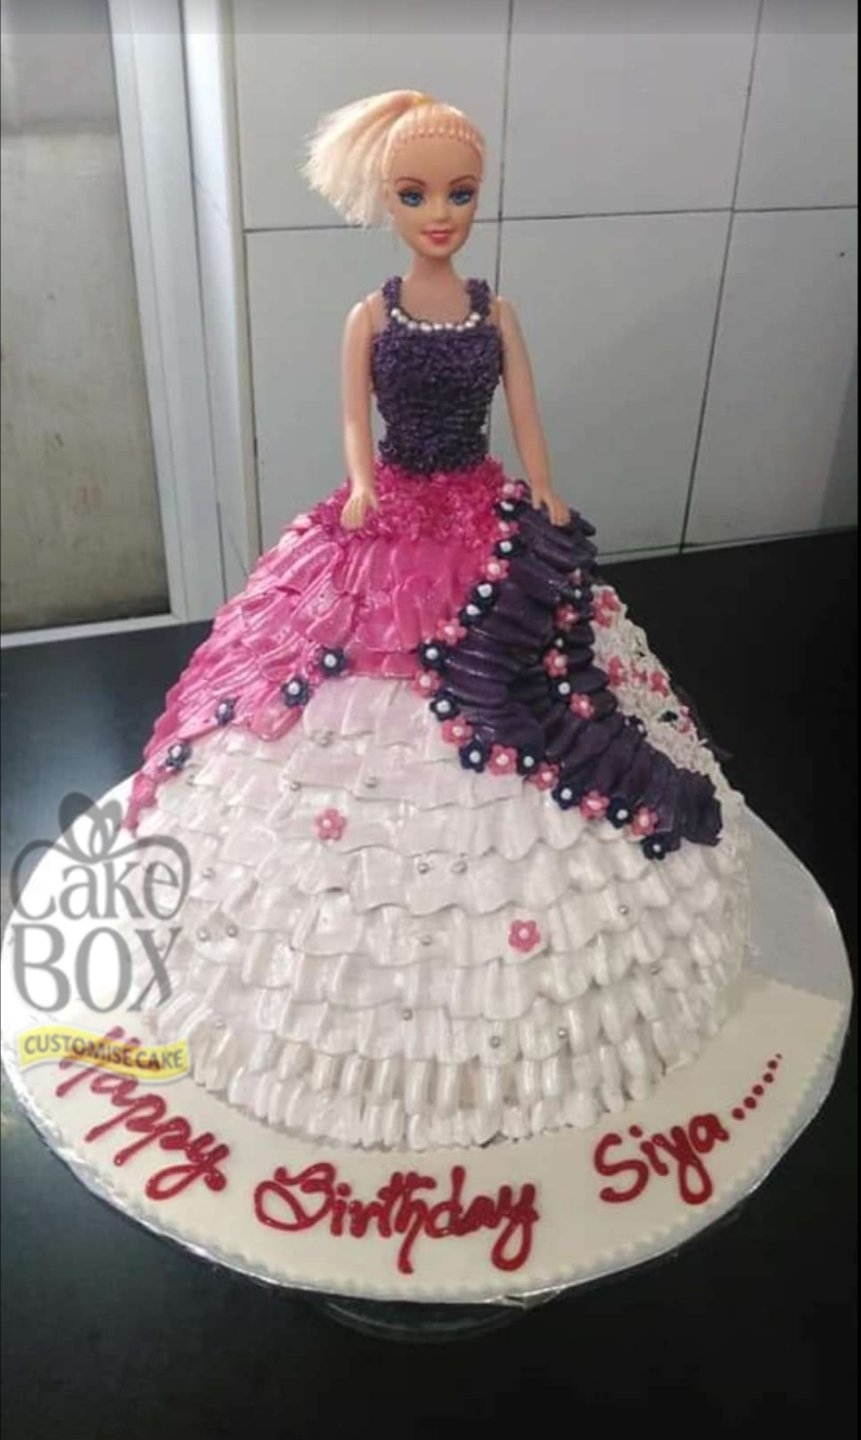 1kg doll cake - YouTube | Barbie doll cakes, Doll cake, Cake